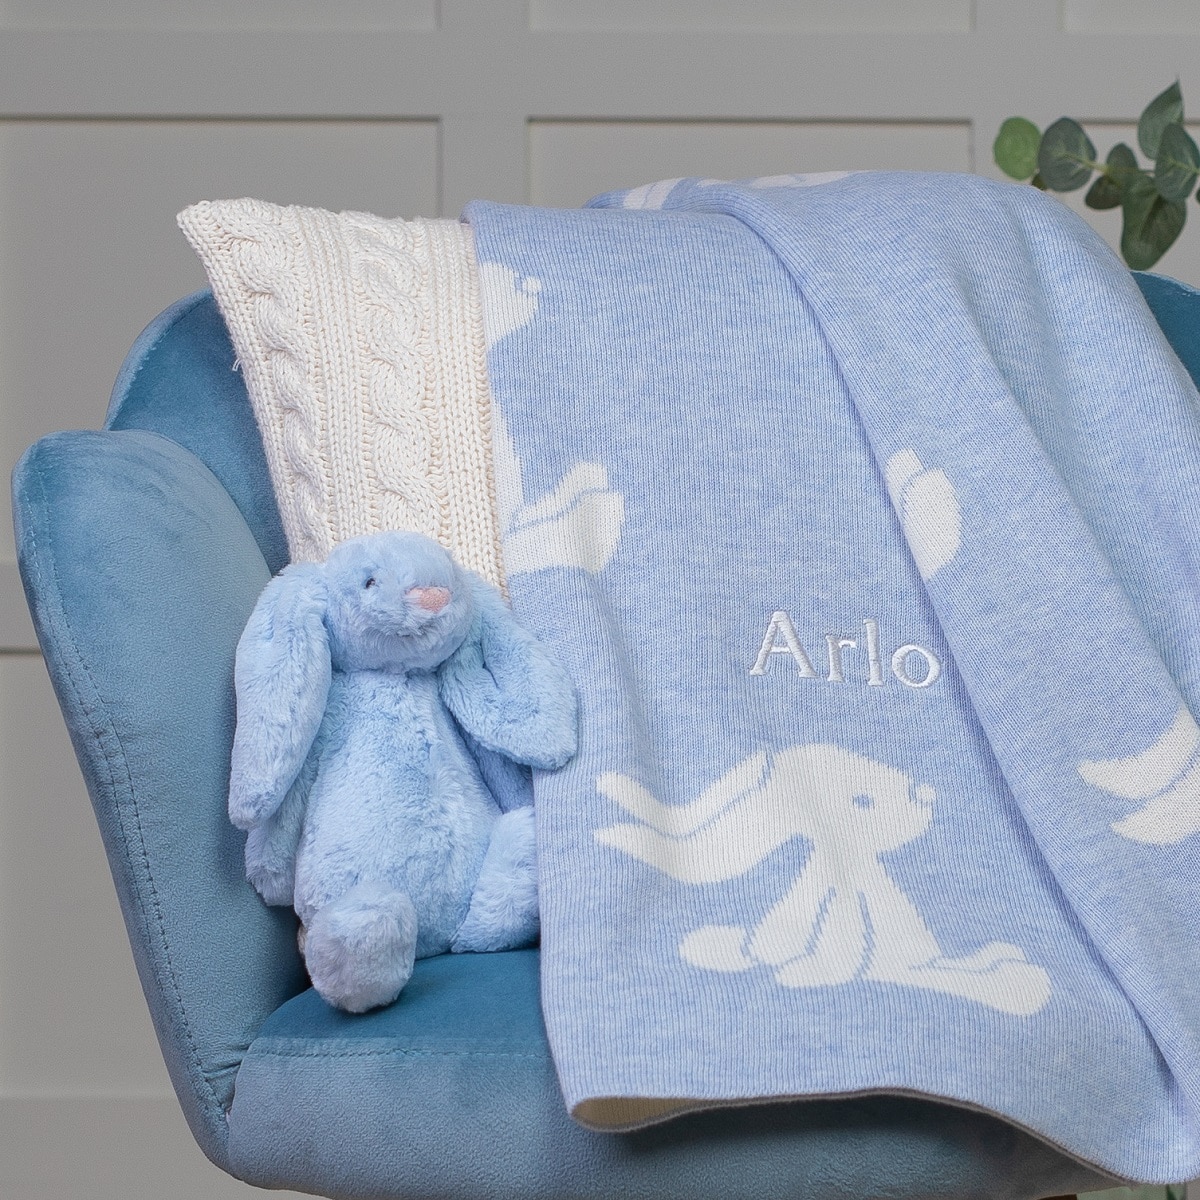 Personalised Jellycat blue bashful bunny baby blanket